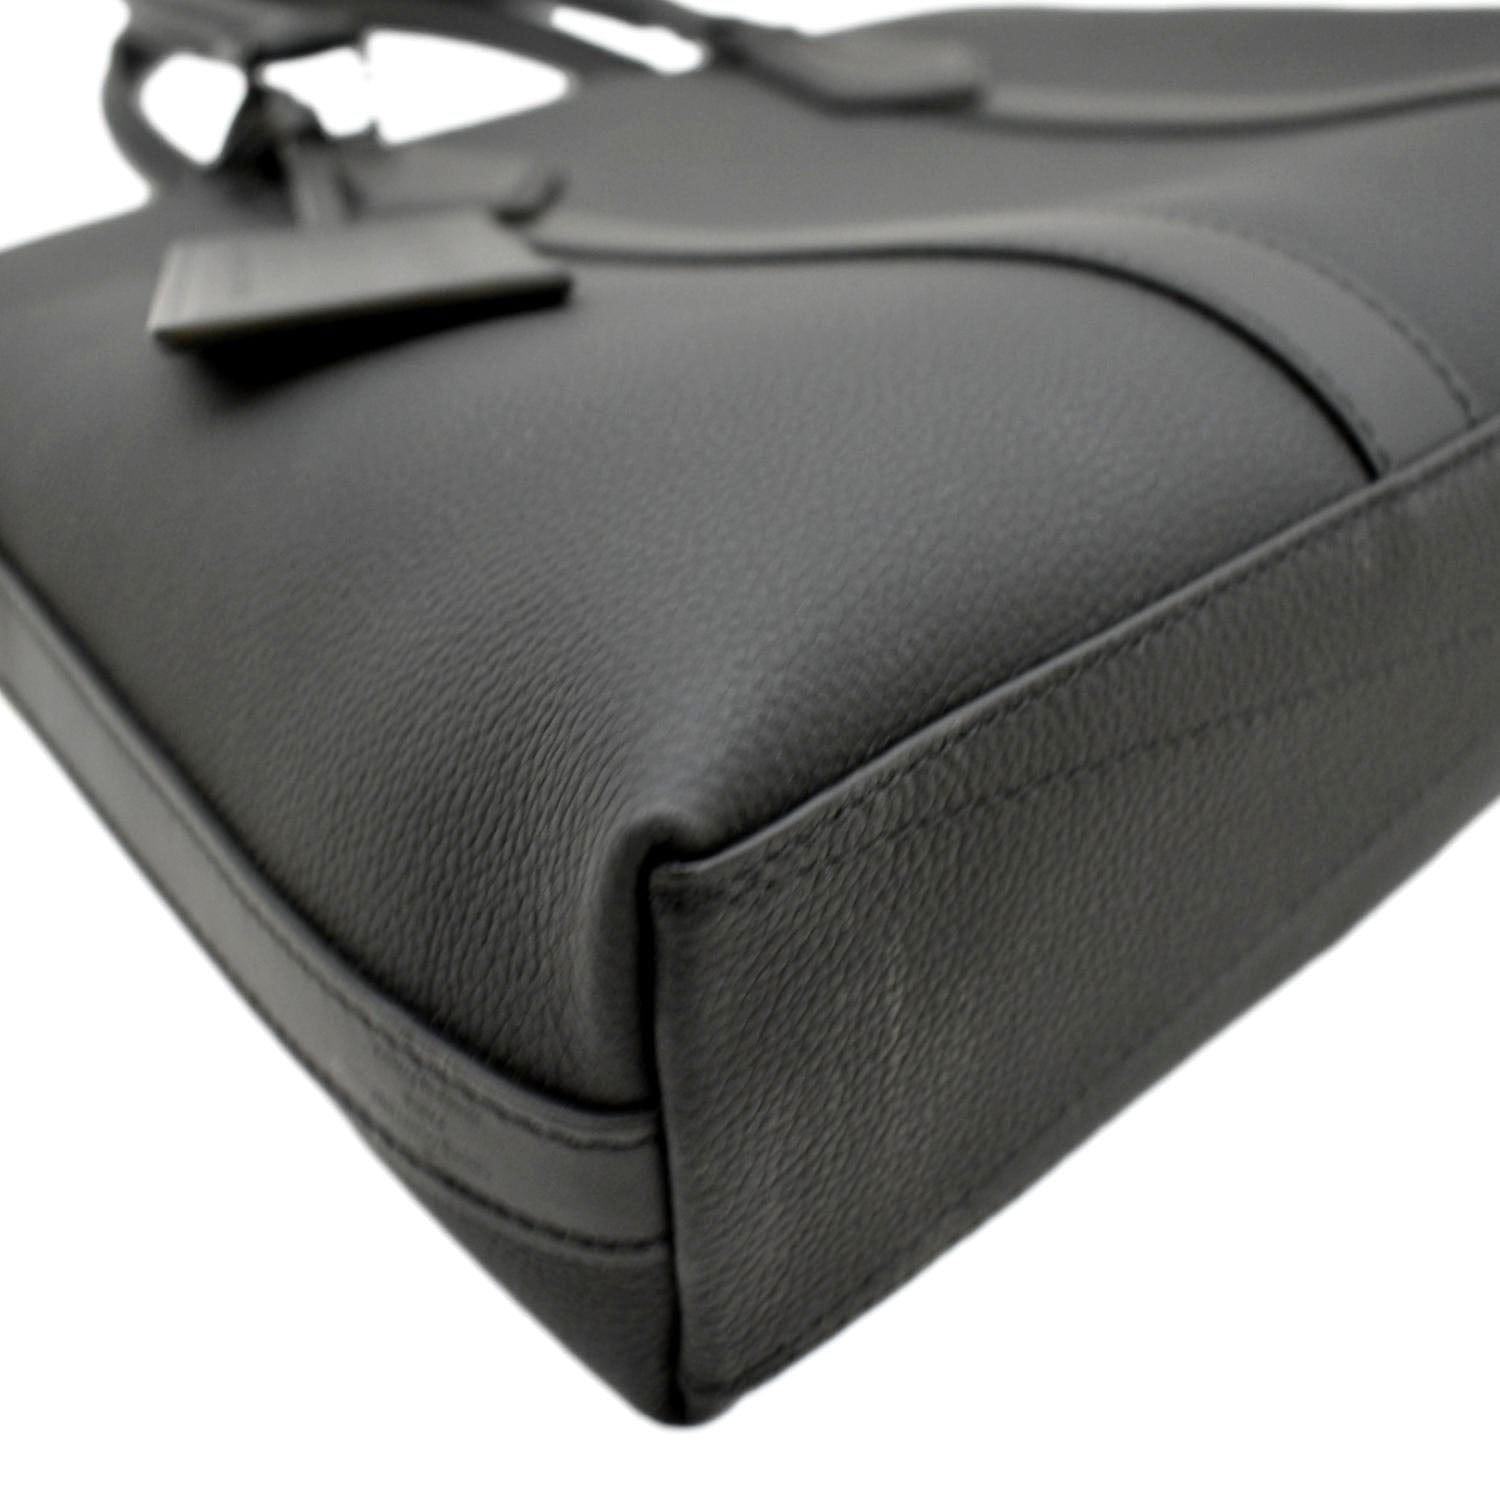 Louis Vuitton Takeoff Briefcase Black autres Cuirs